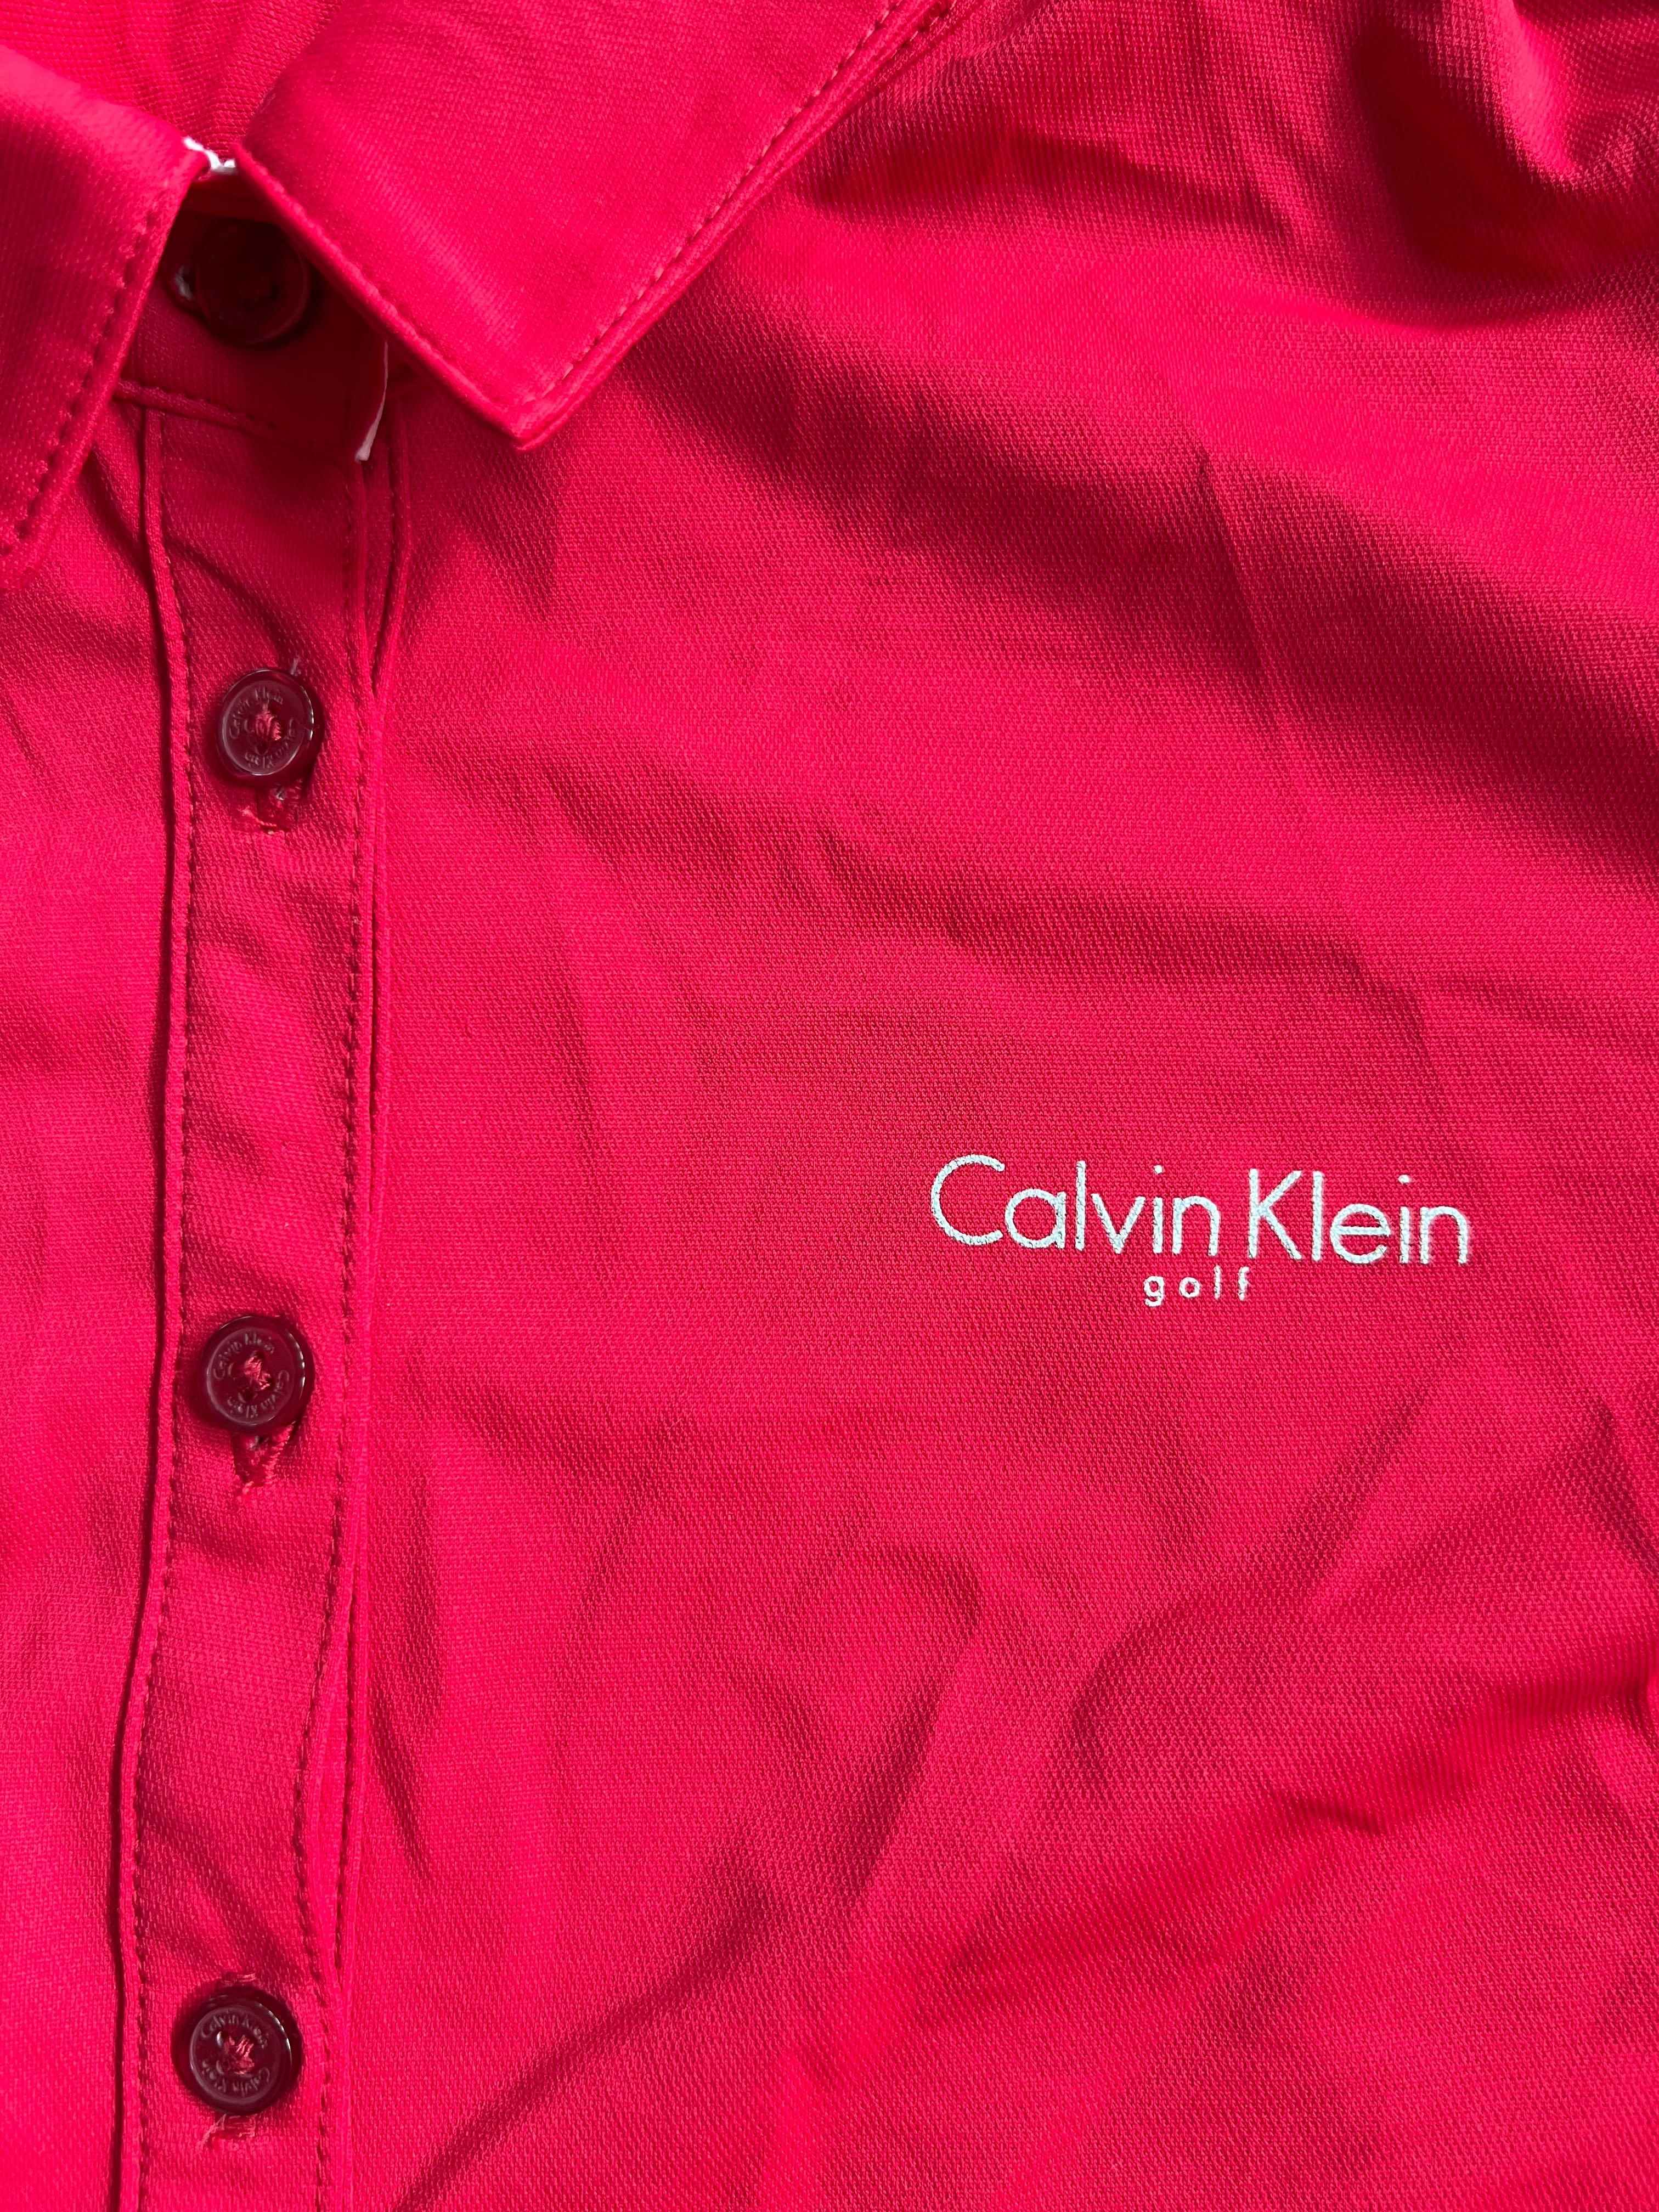 Calvin Klein Golf Shirt, Women's Fashion, Activewear on Carousell